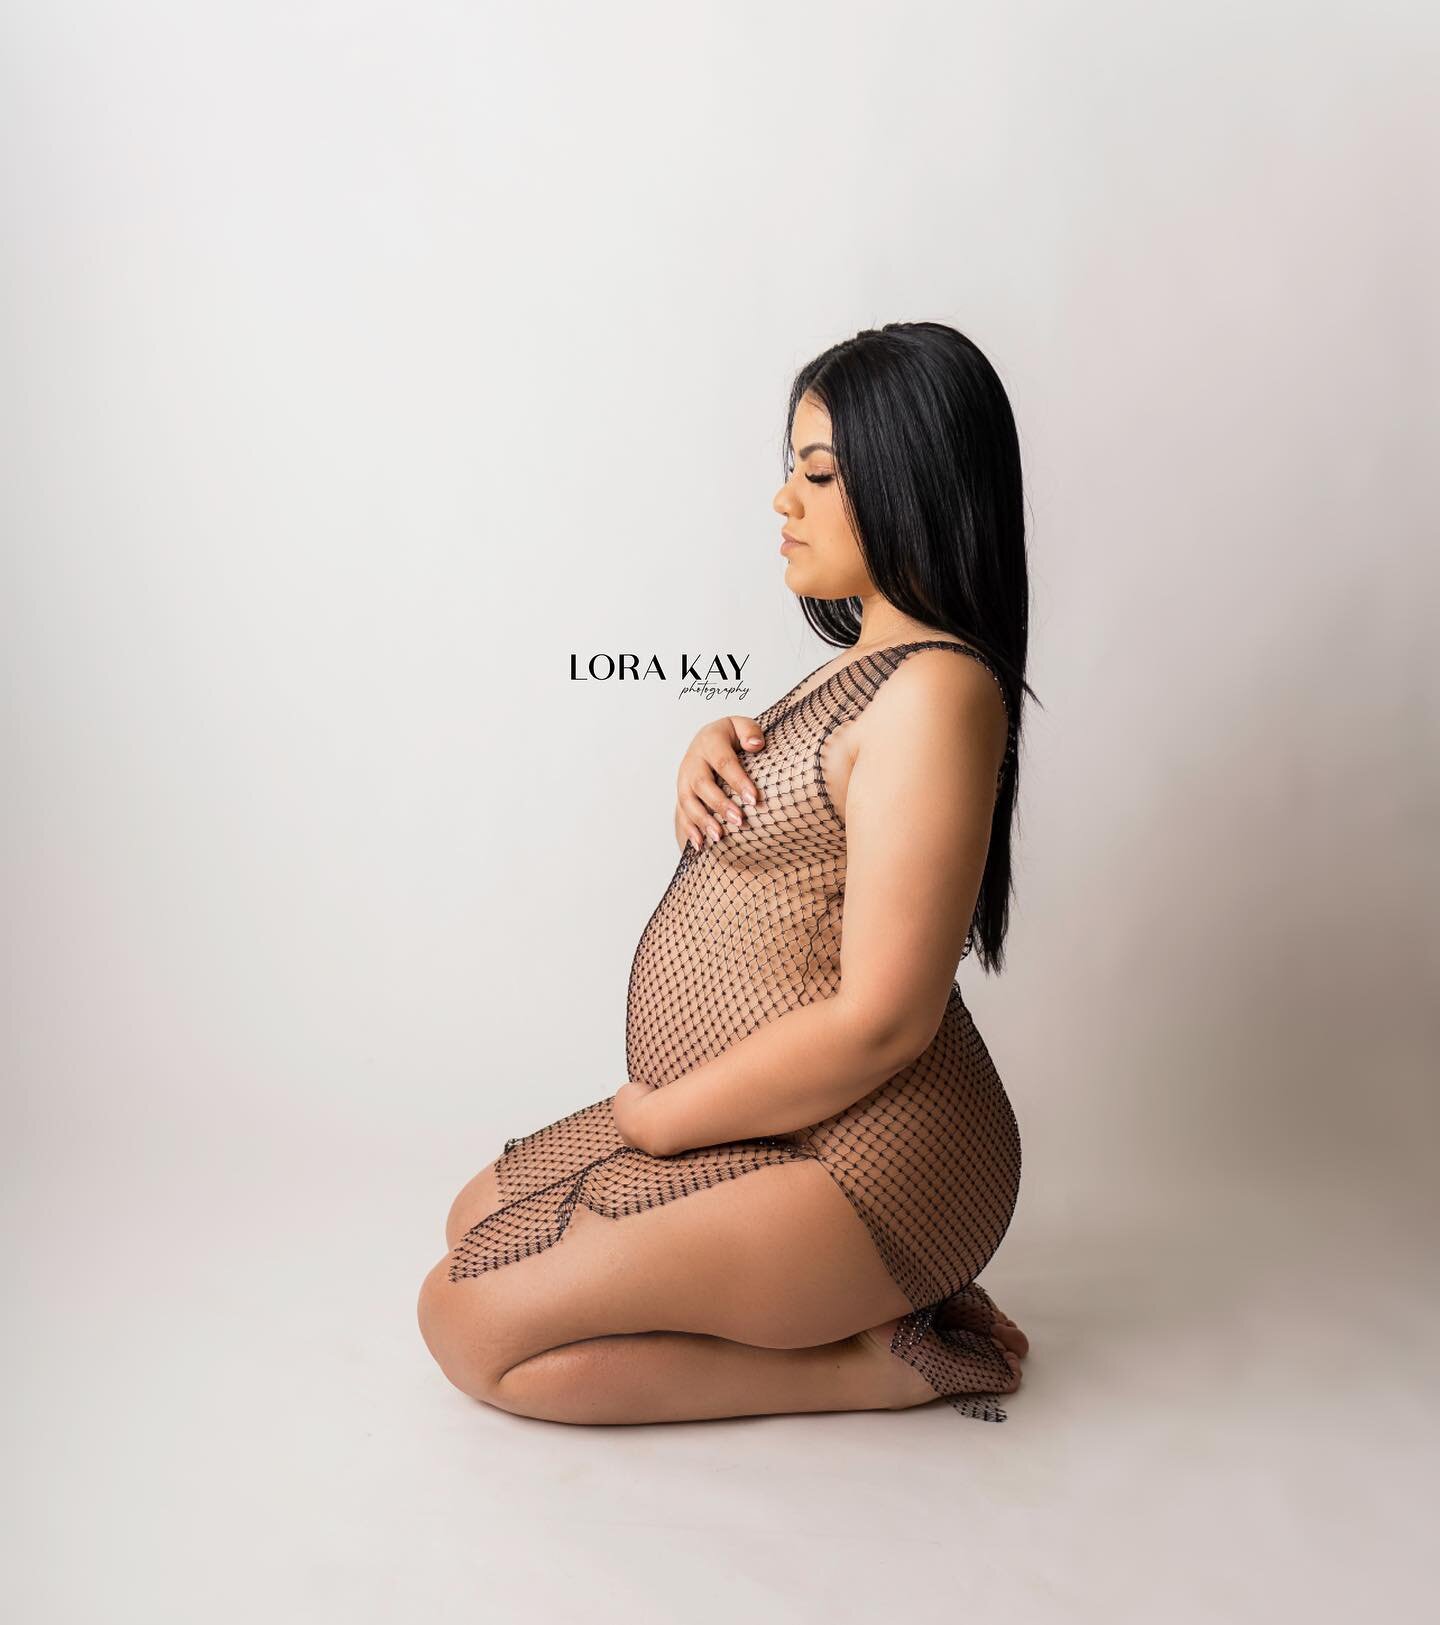 🖤✨✨#pregnantandperfect #maternityphotography #lorakayphotography #lorakayphotos #explore #explorepage #allrightsreserved #maternityfashion #amternityshoot #pregnancy #pregnancyphotos